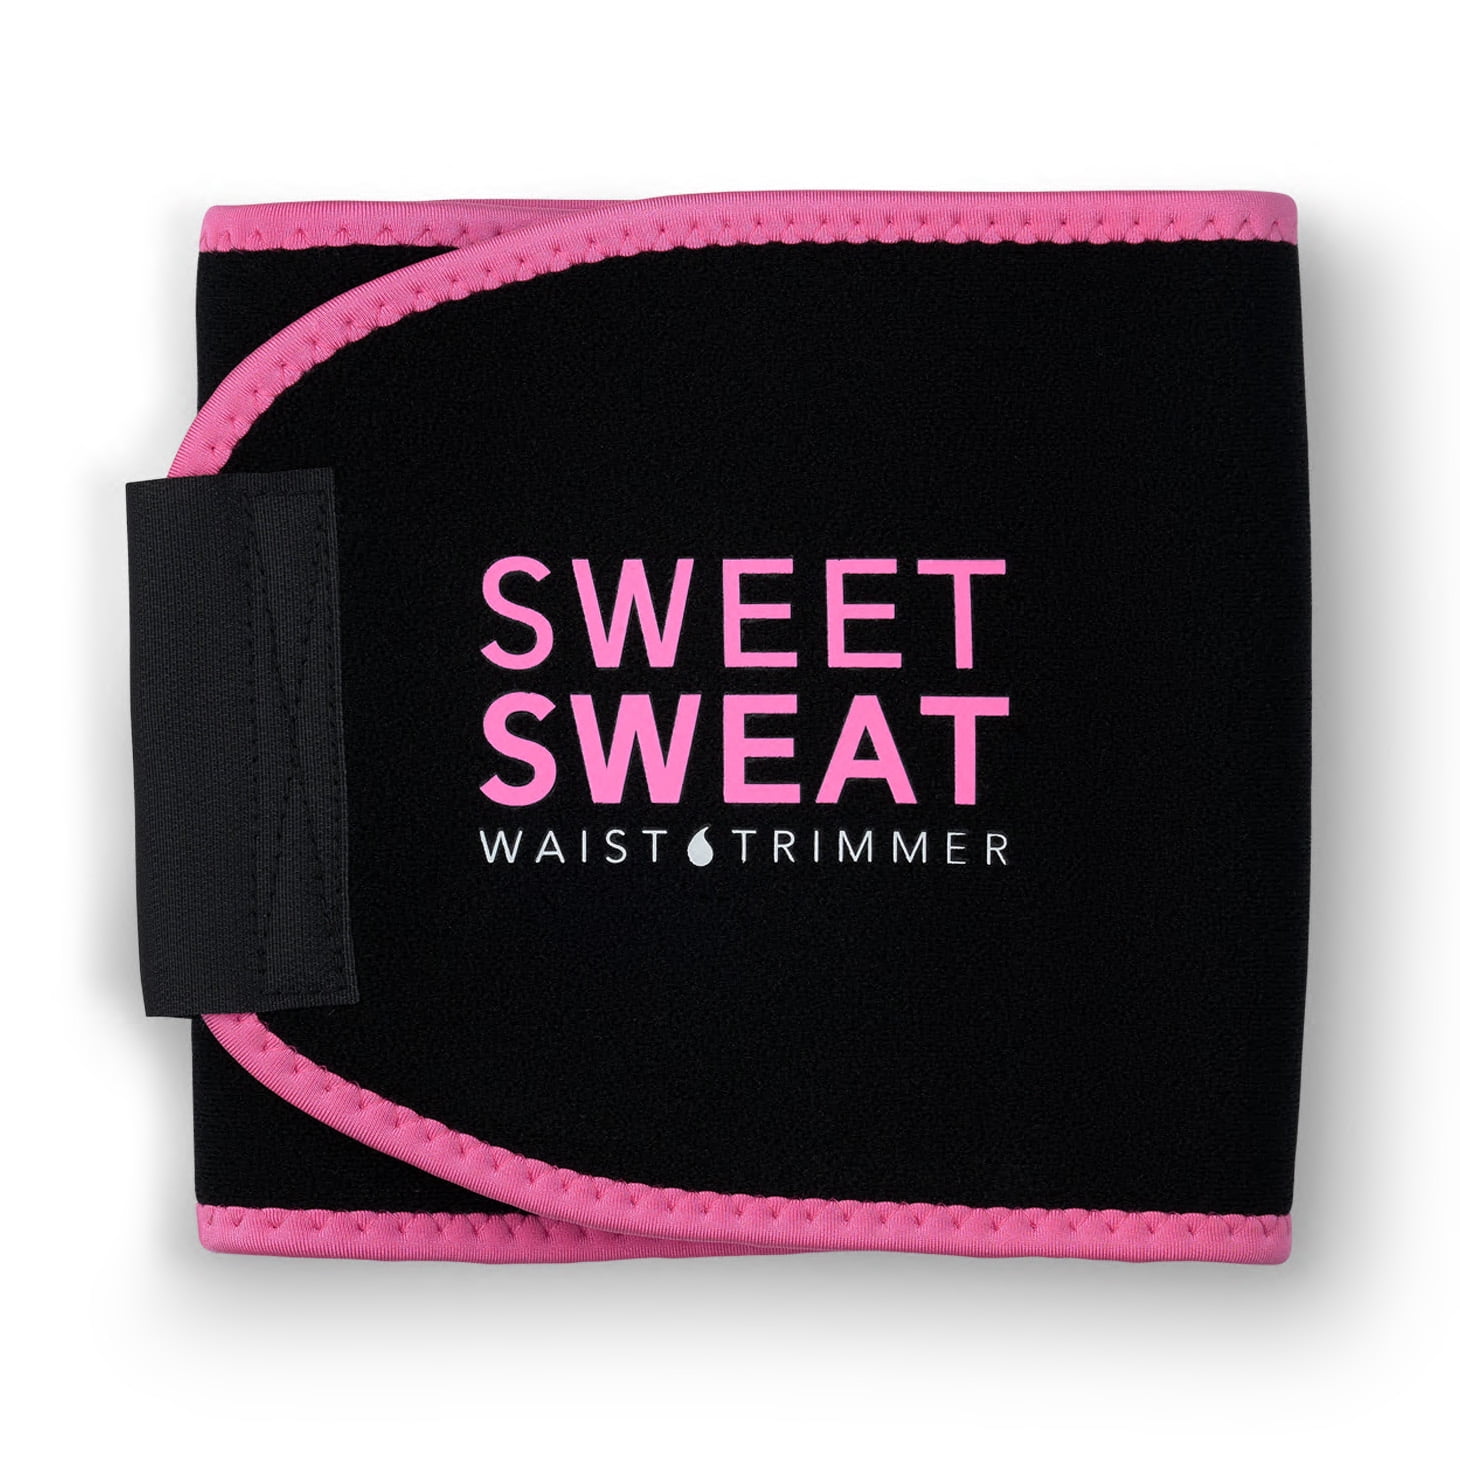 Sweat Belt Buy Online